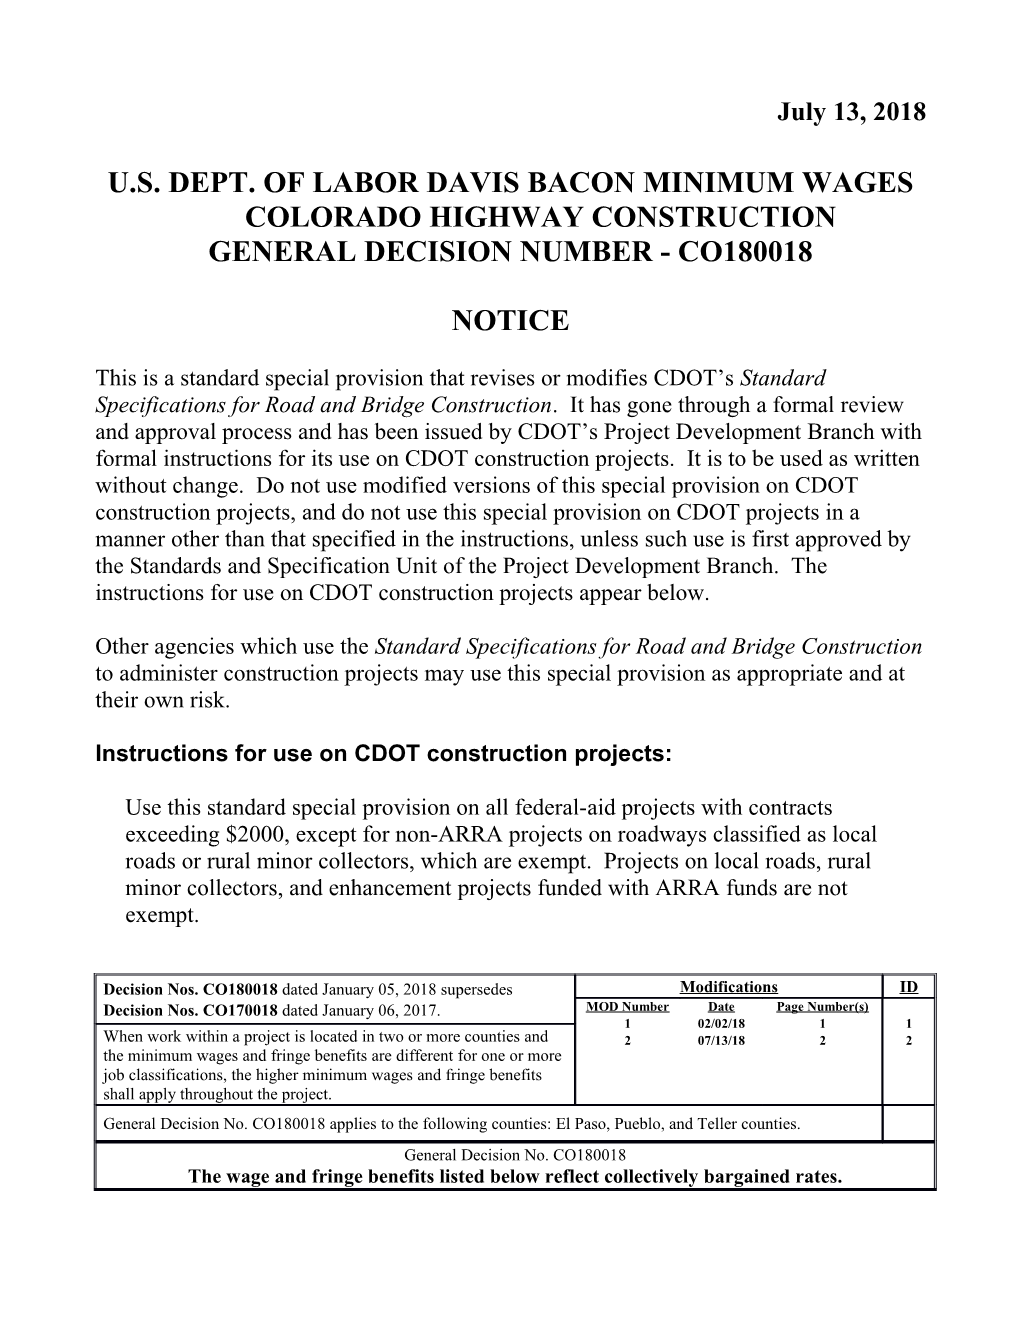 U.S. Dept. of Labordavis Bacon Minimum Wages Coloradohighway Construction